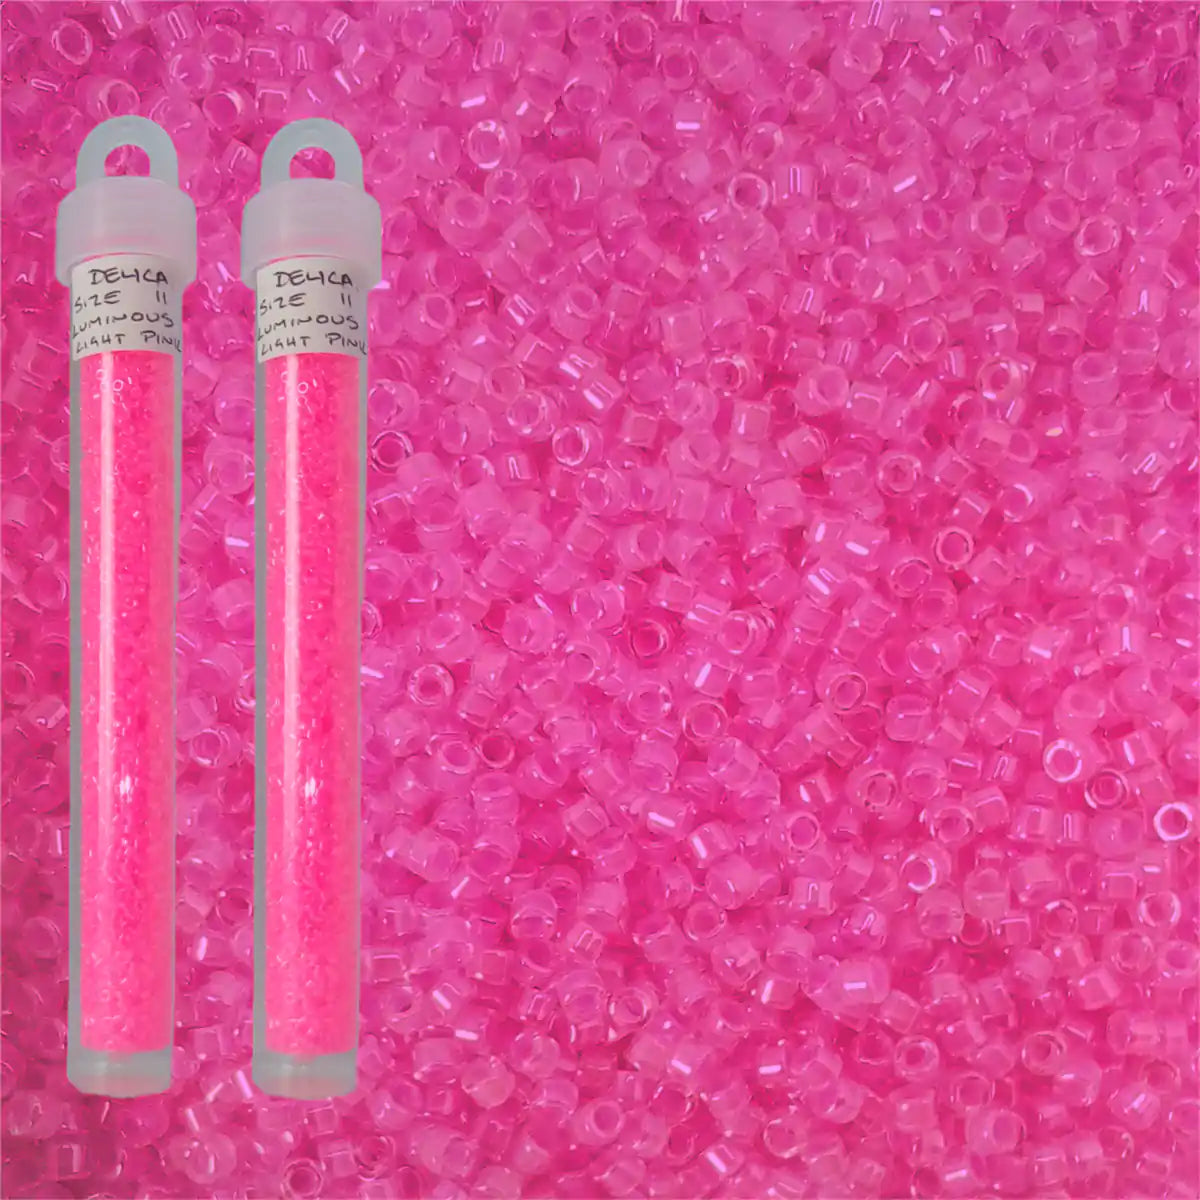 Delica beads luminous light pink size 11